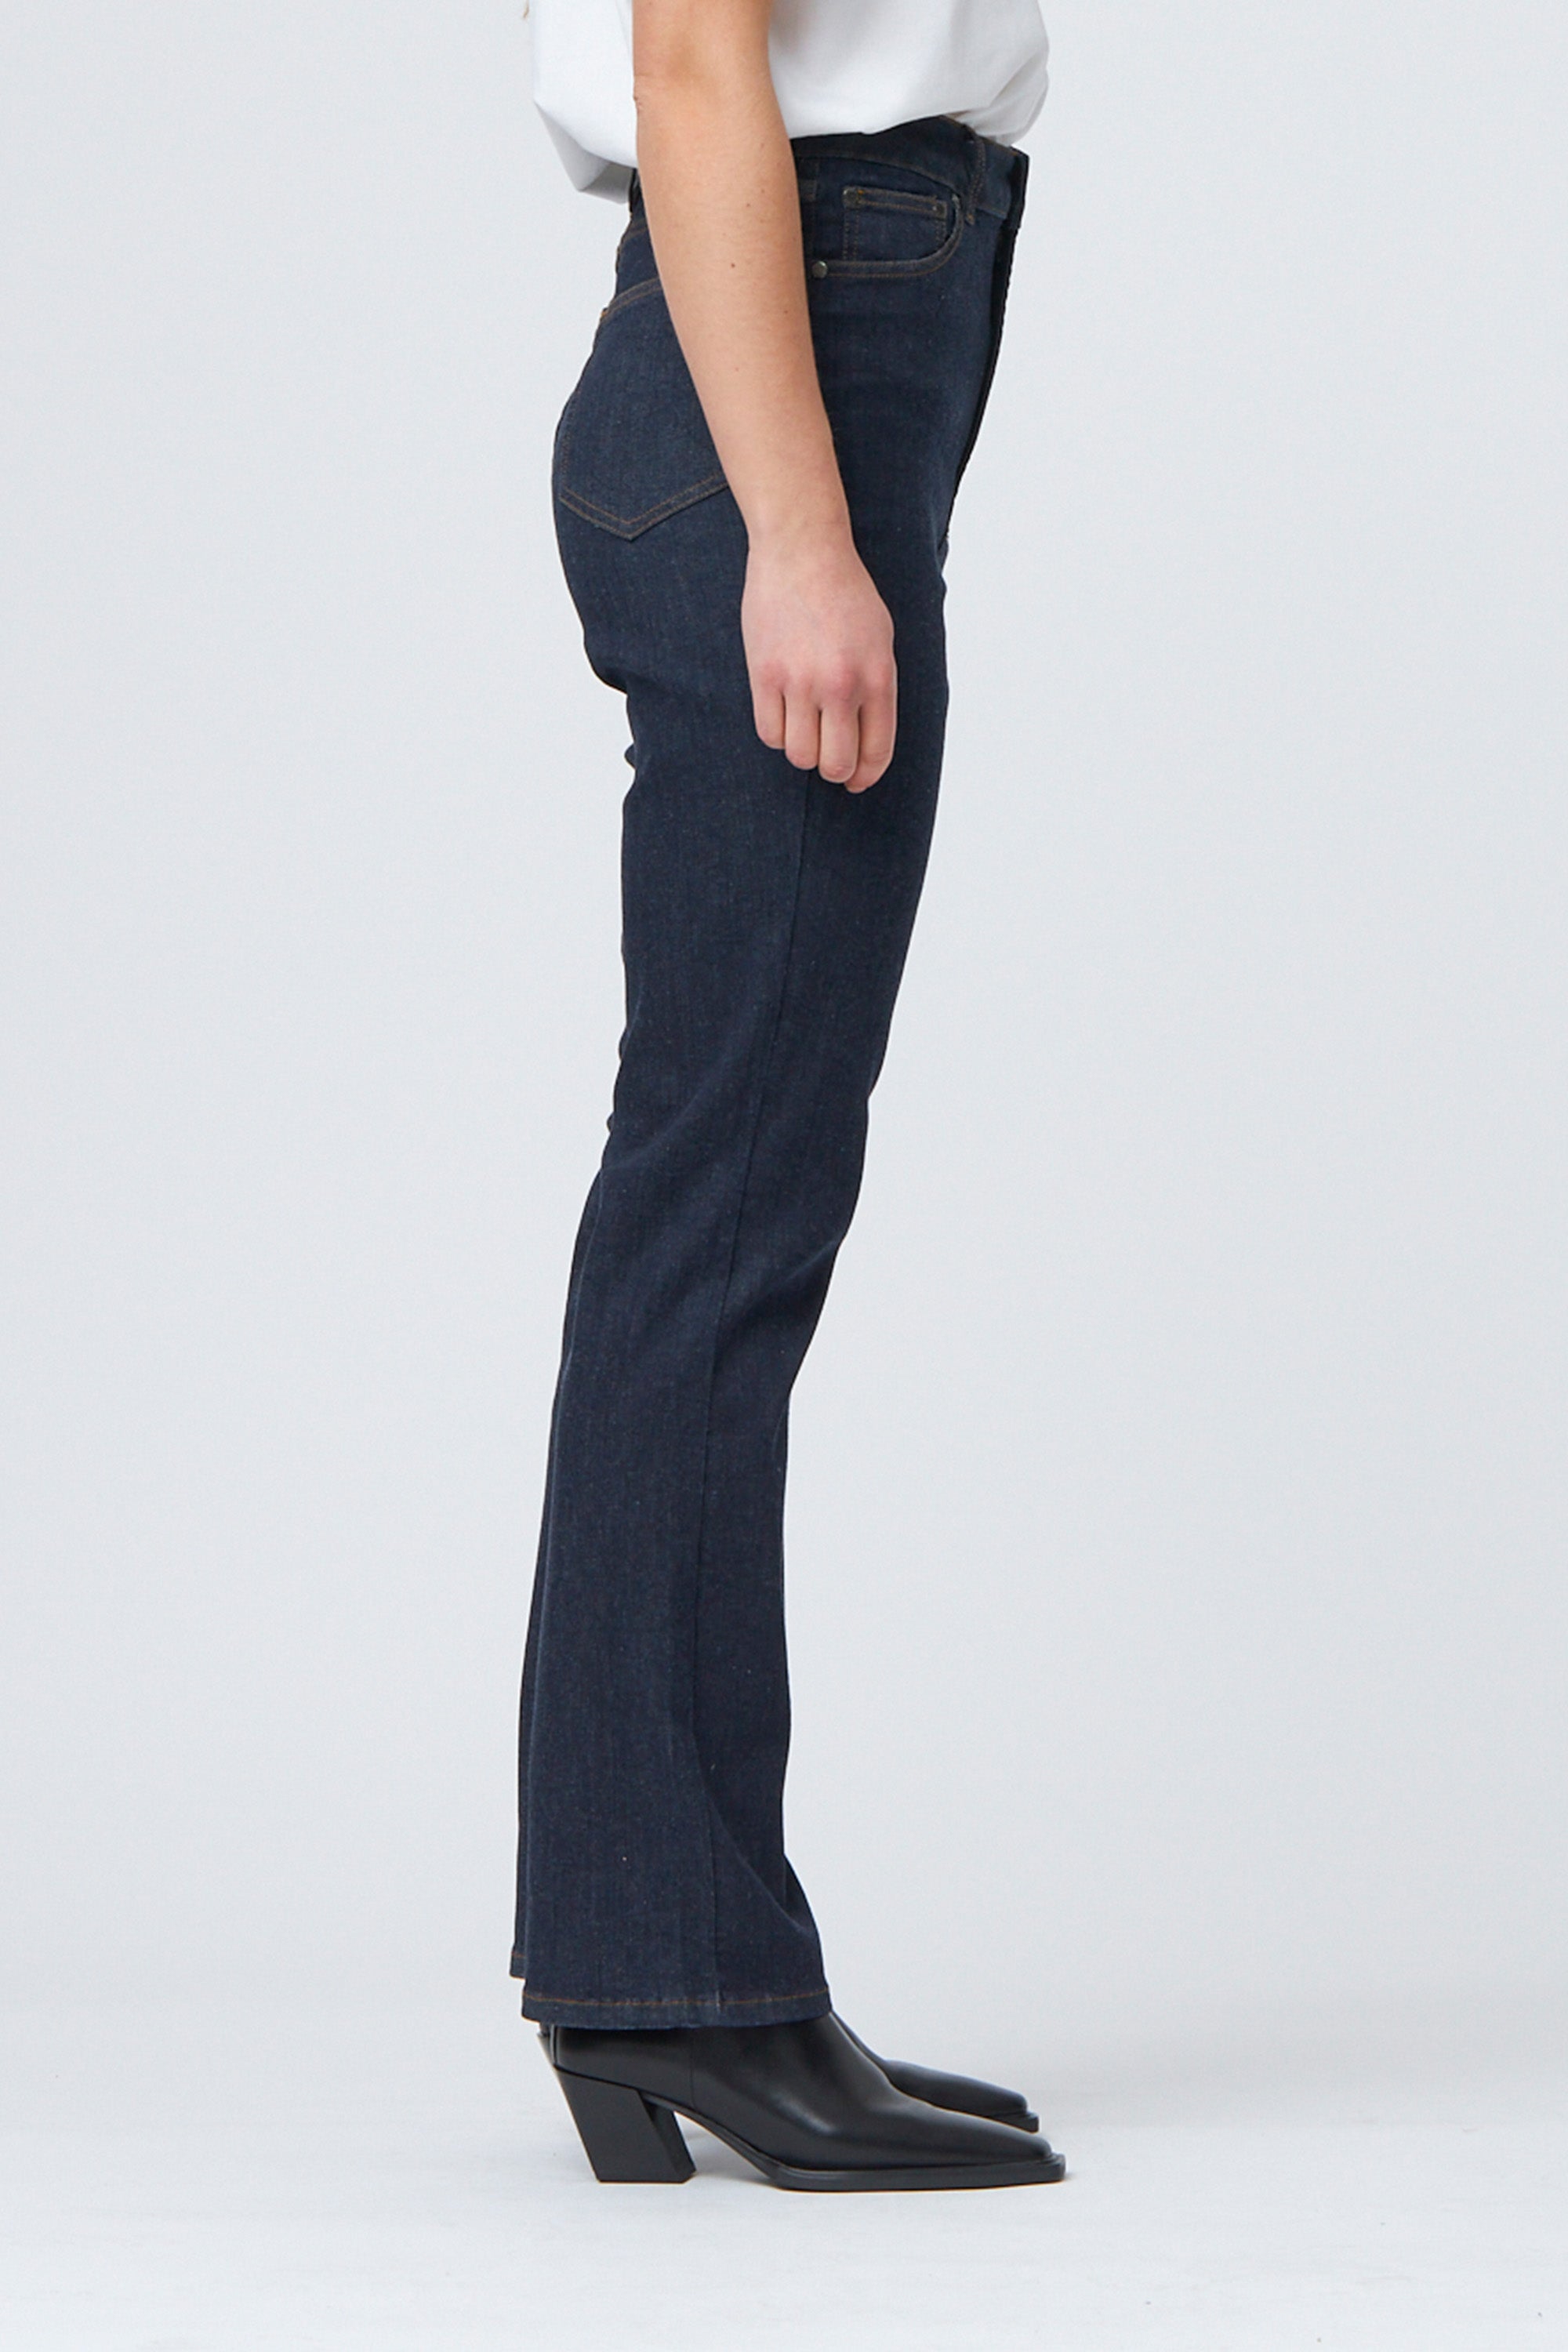 Tomorrow TRW-Cate Bullet Shape Jeans Wash Raw Bardolino Jeans & Pants 51 Denim Blue